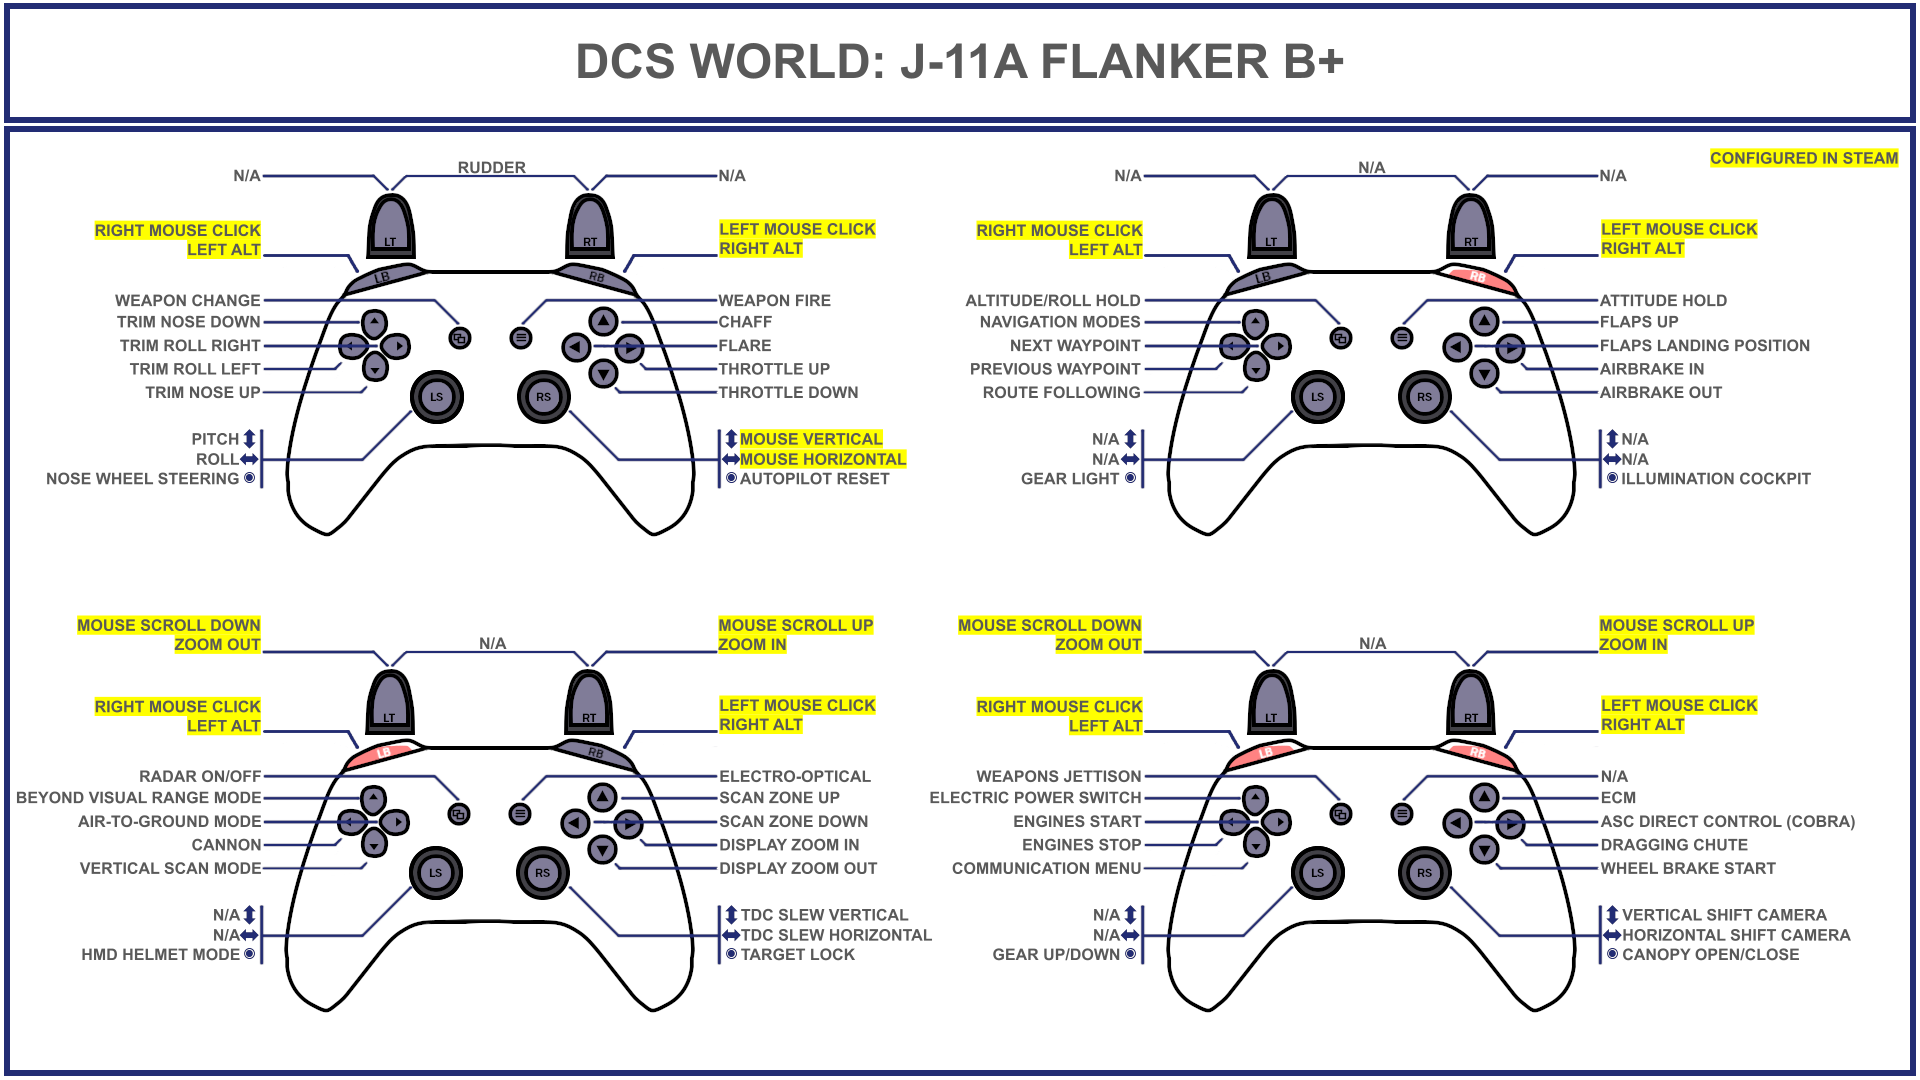 Tuuvas' Official J-11A Flanker B+ Gamepad Controller Layout